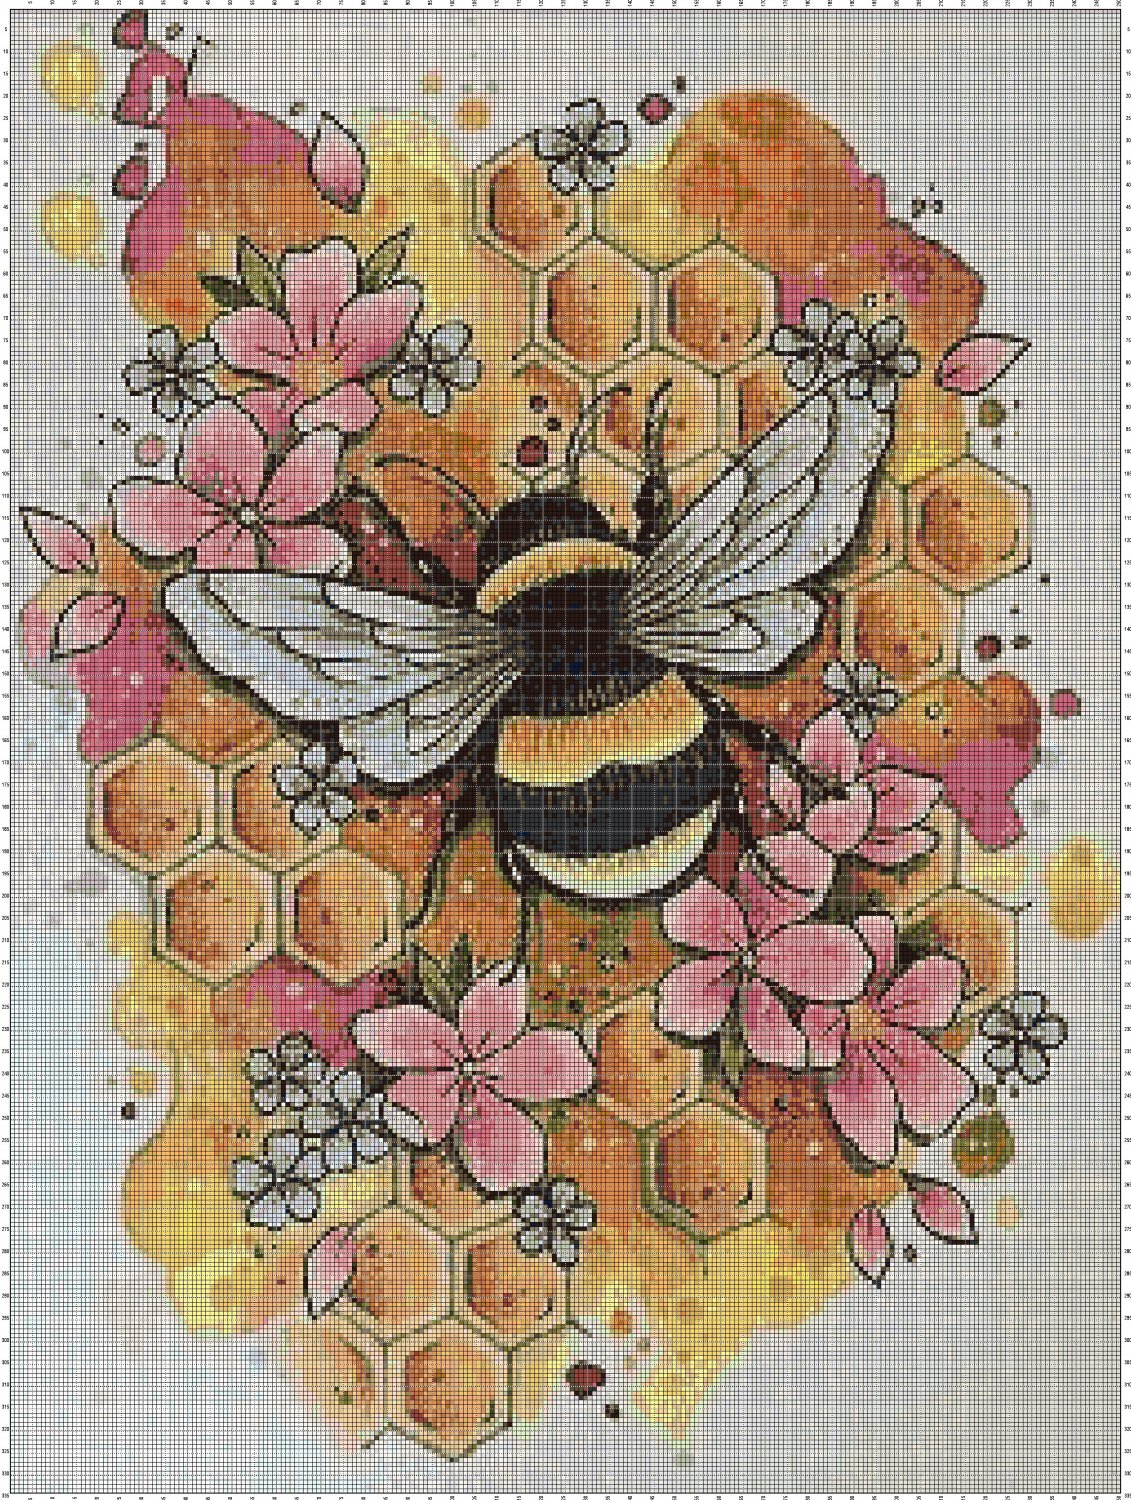 Honey bee DMC cross stitch pattern in pdf DMC